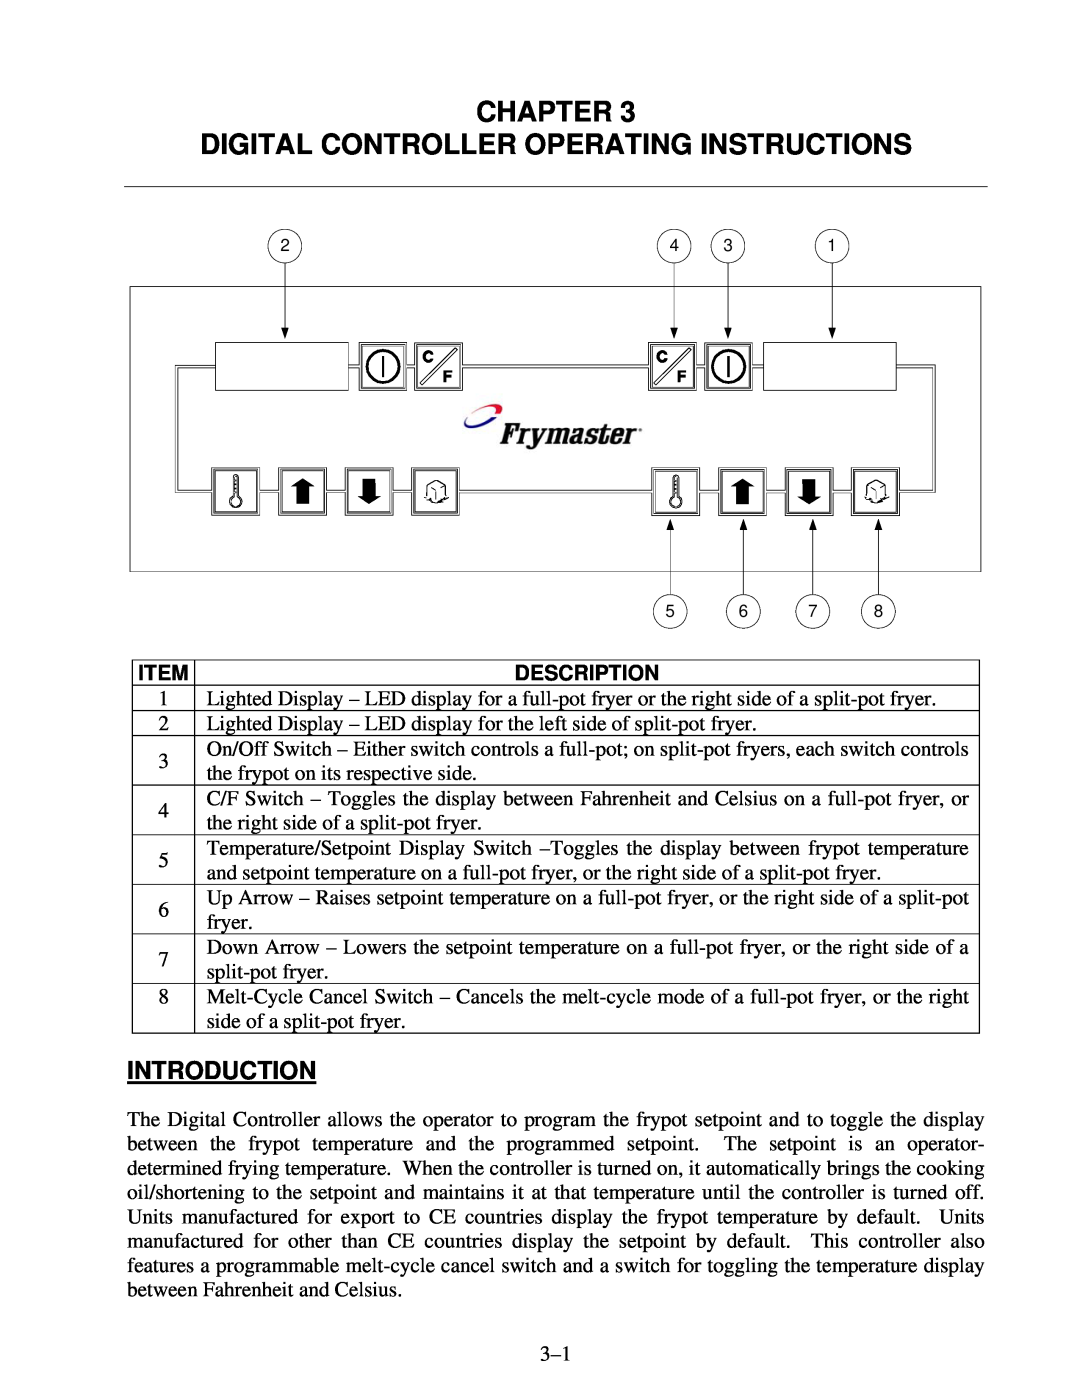 Frymaster 8195916 user manual Chapter Digital Controller Operating Instructions, Introduction, Description 